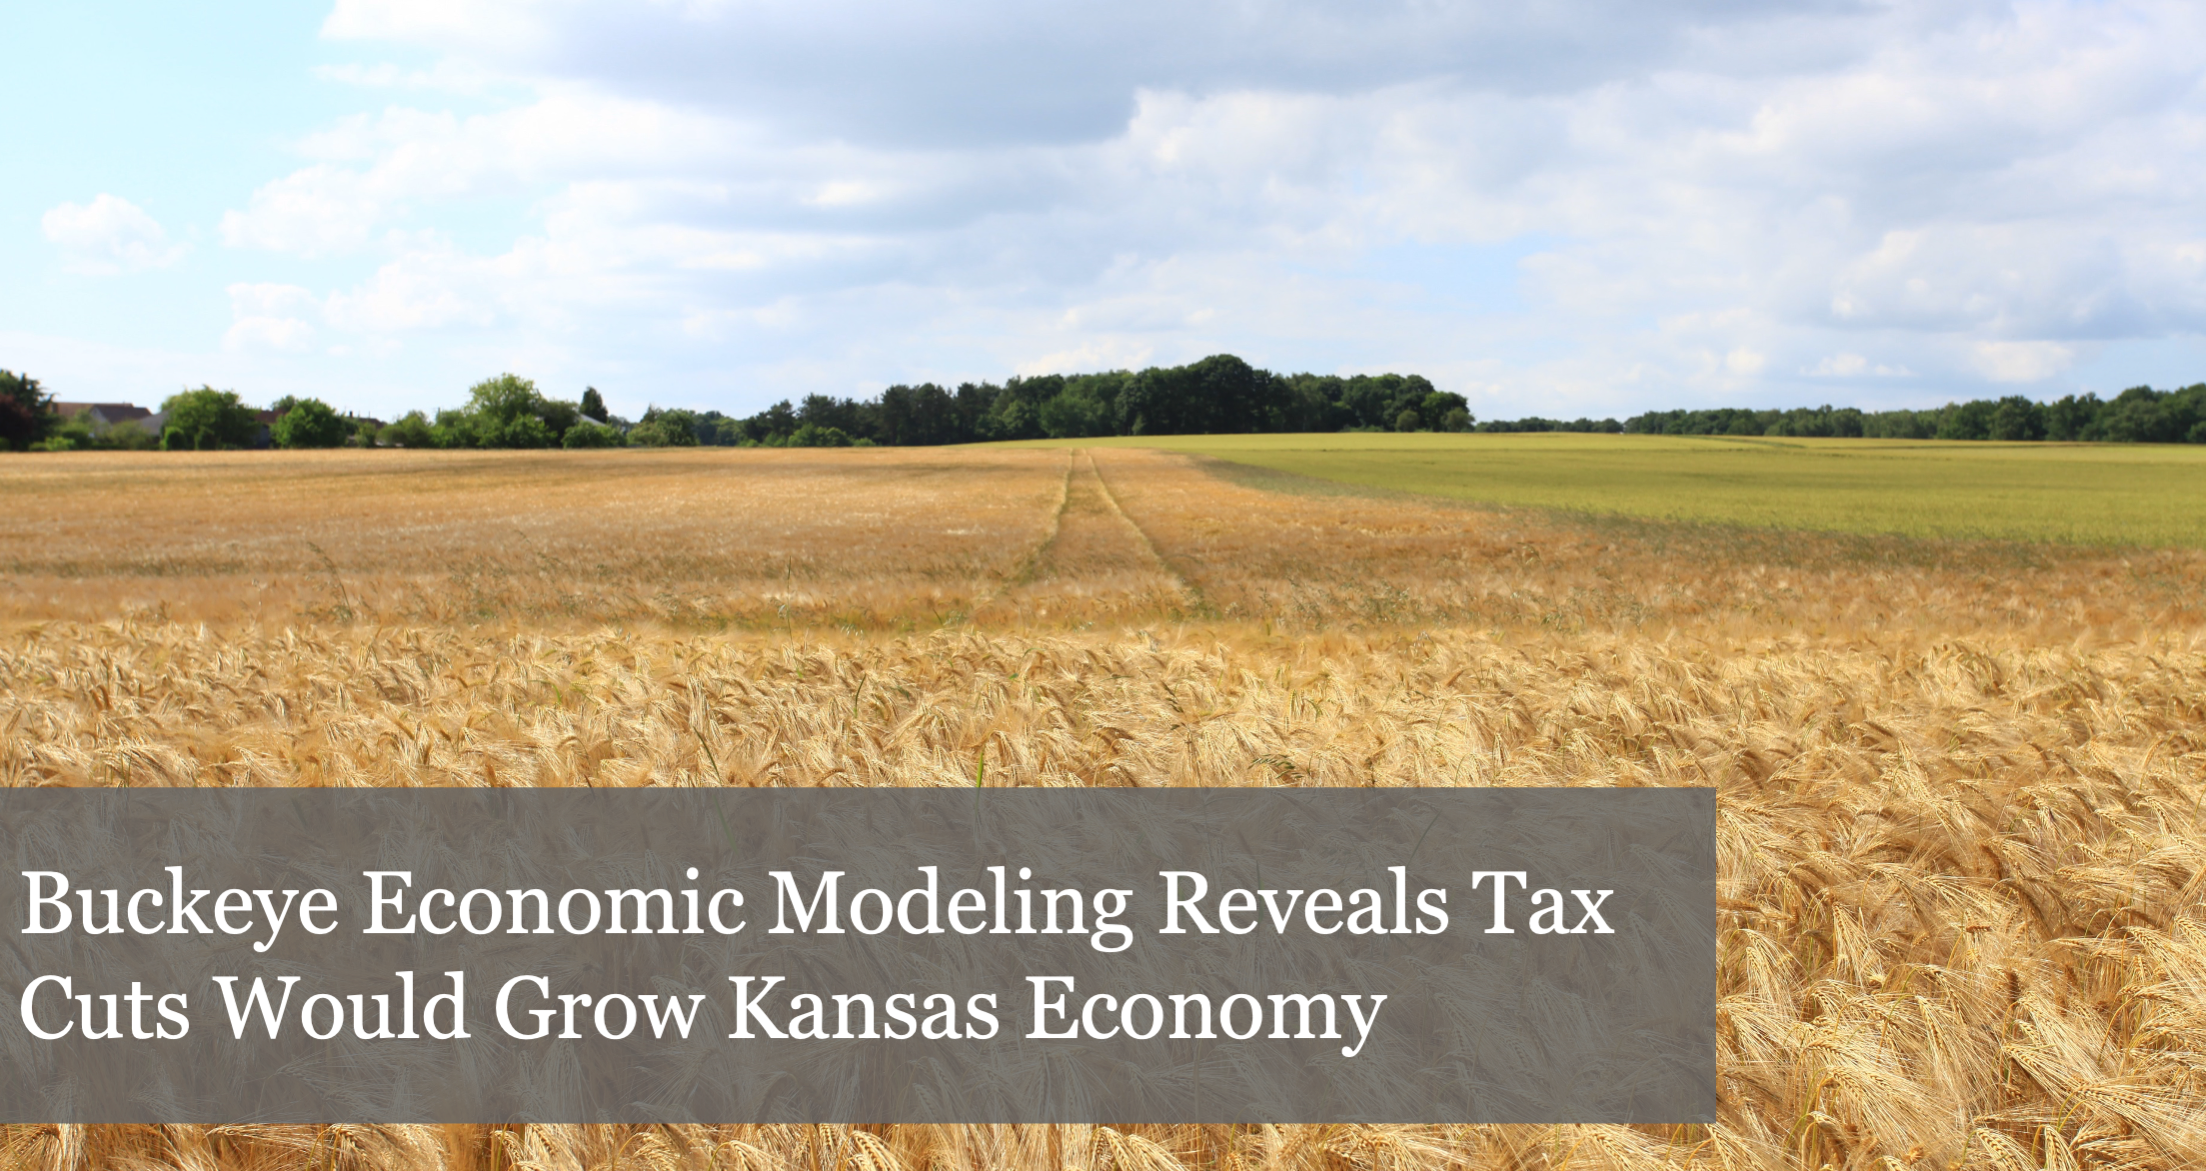 New Buckeye Institute Economic Modeling Reveals Tax Cuts Would Grow Kansas Economy